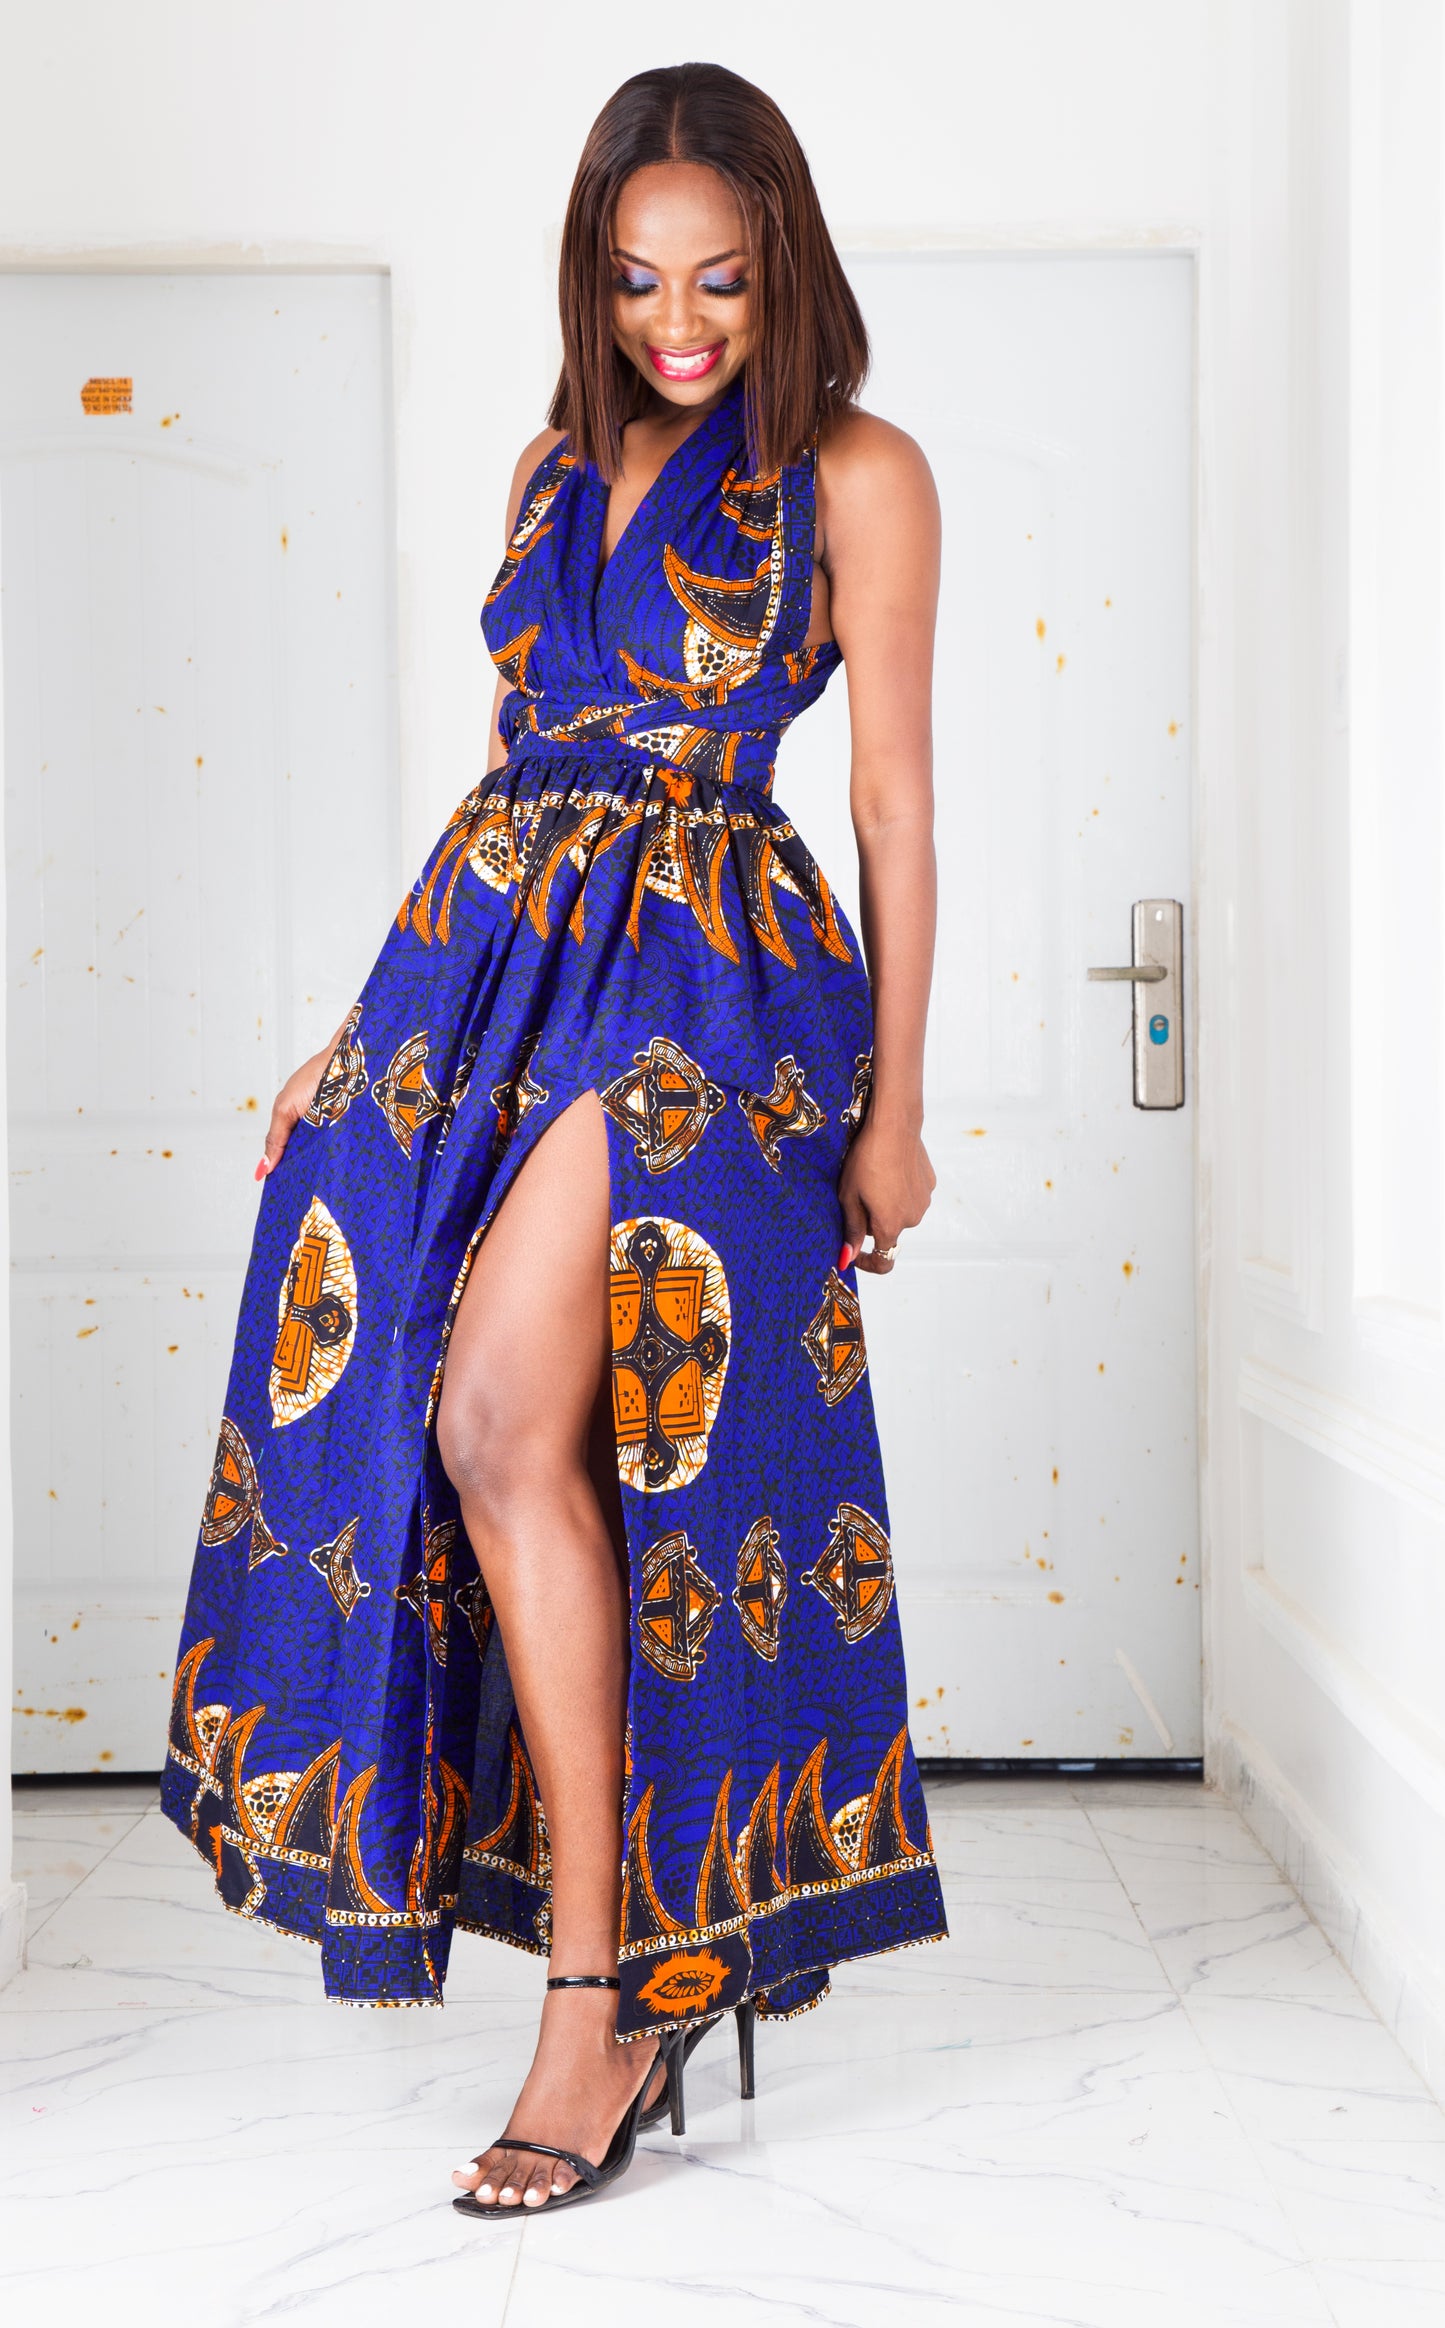 BLUE ORANGE AFRICAN ANKARA PRINT PLUS SIZE CLOTHING PARTY DRESS